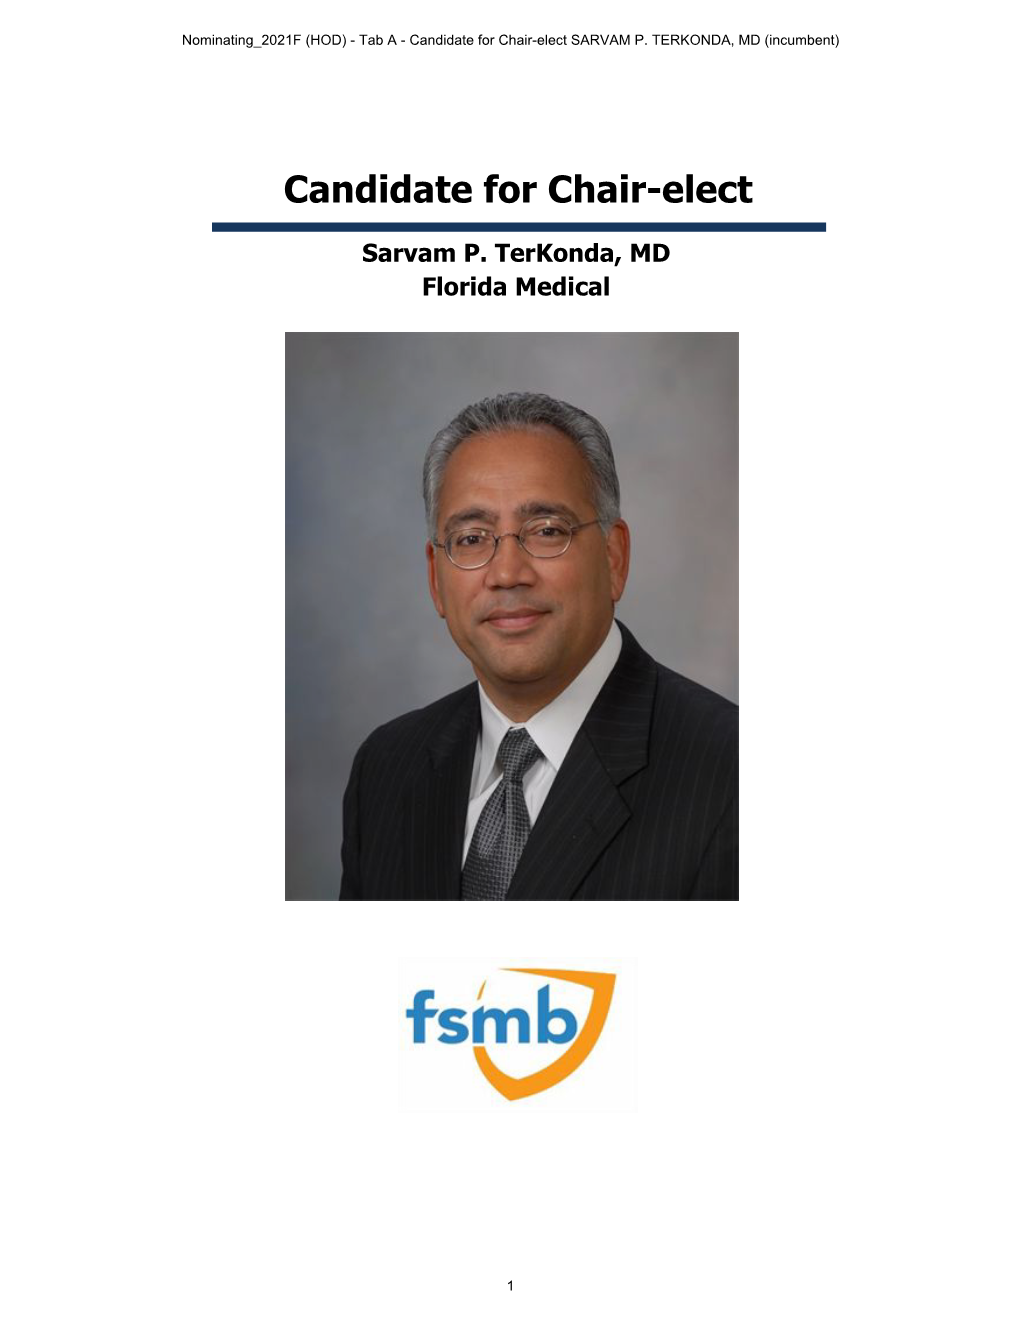 Candidate for Chair-Elect Sarvam P. Terkonda, MD Florida Medical